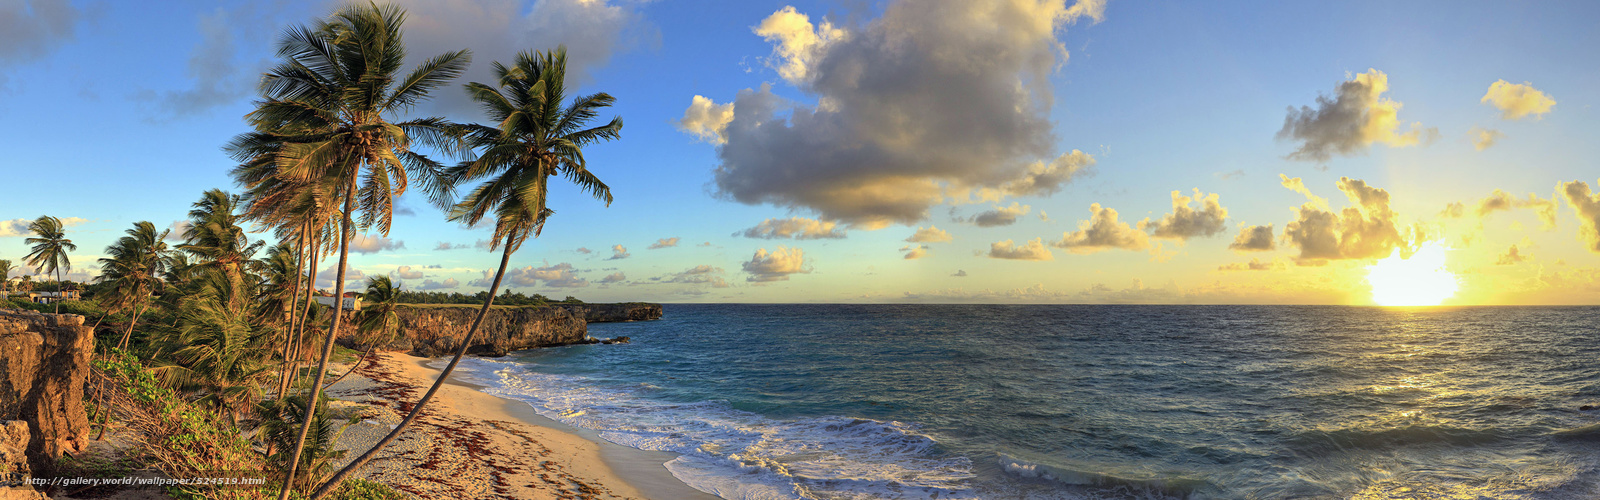 Bay Beach Barbados Caribbean Sea Desktop Wallpaper